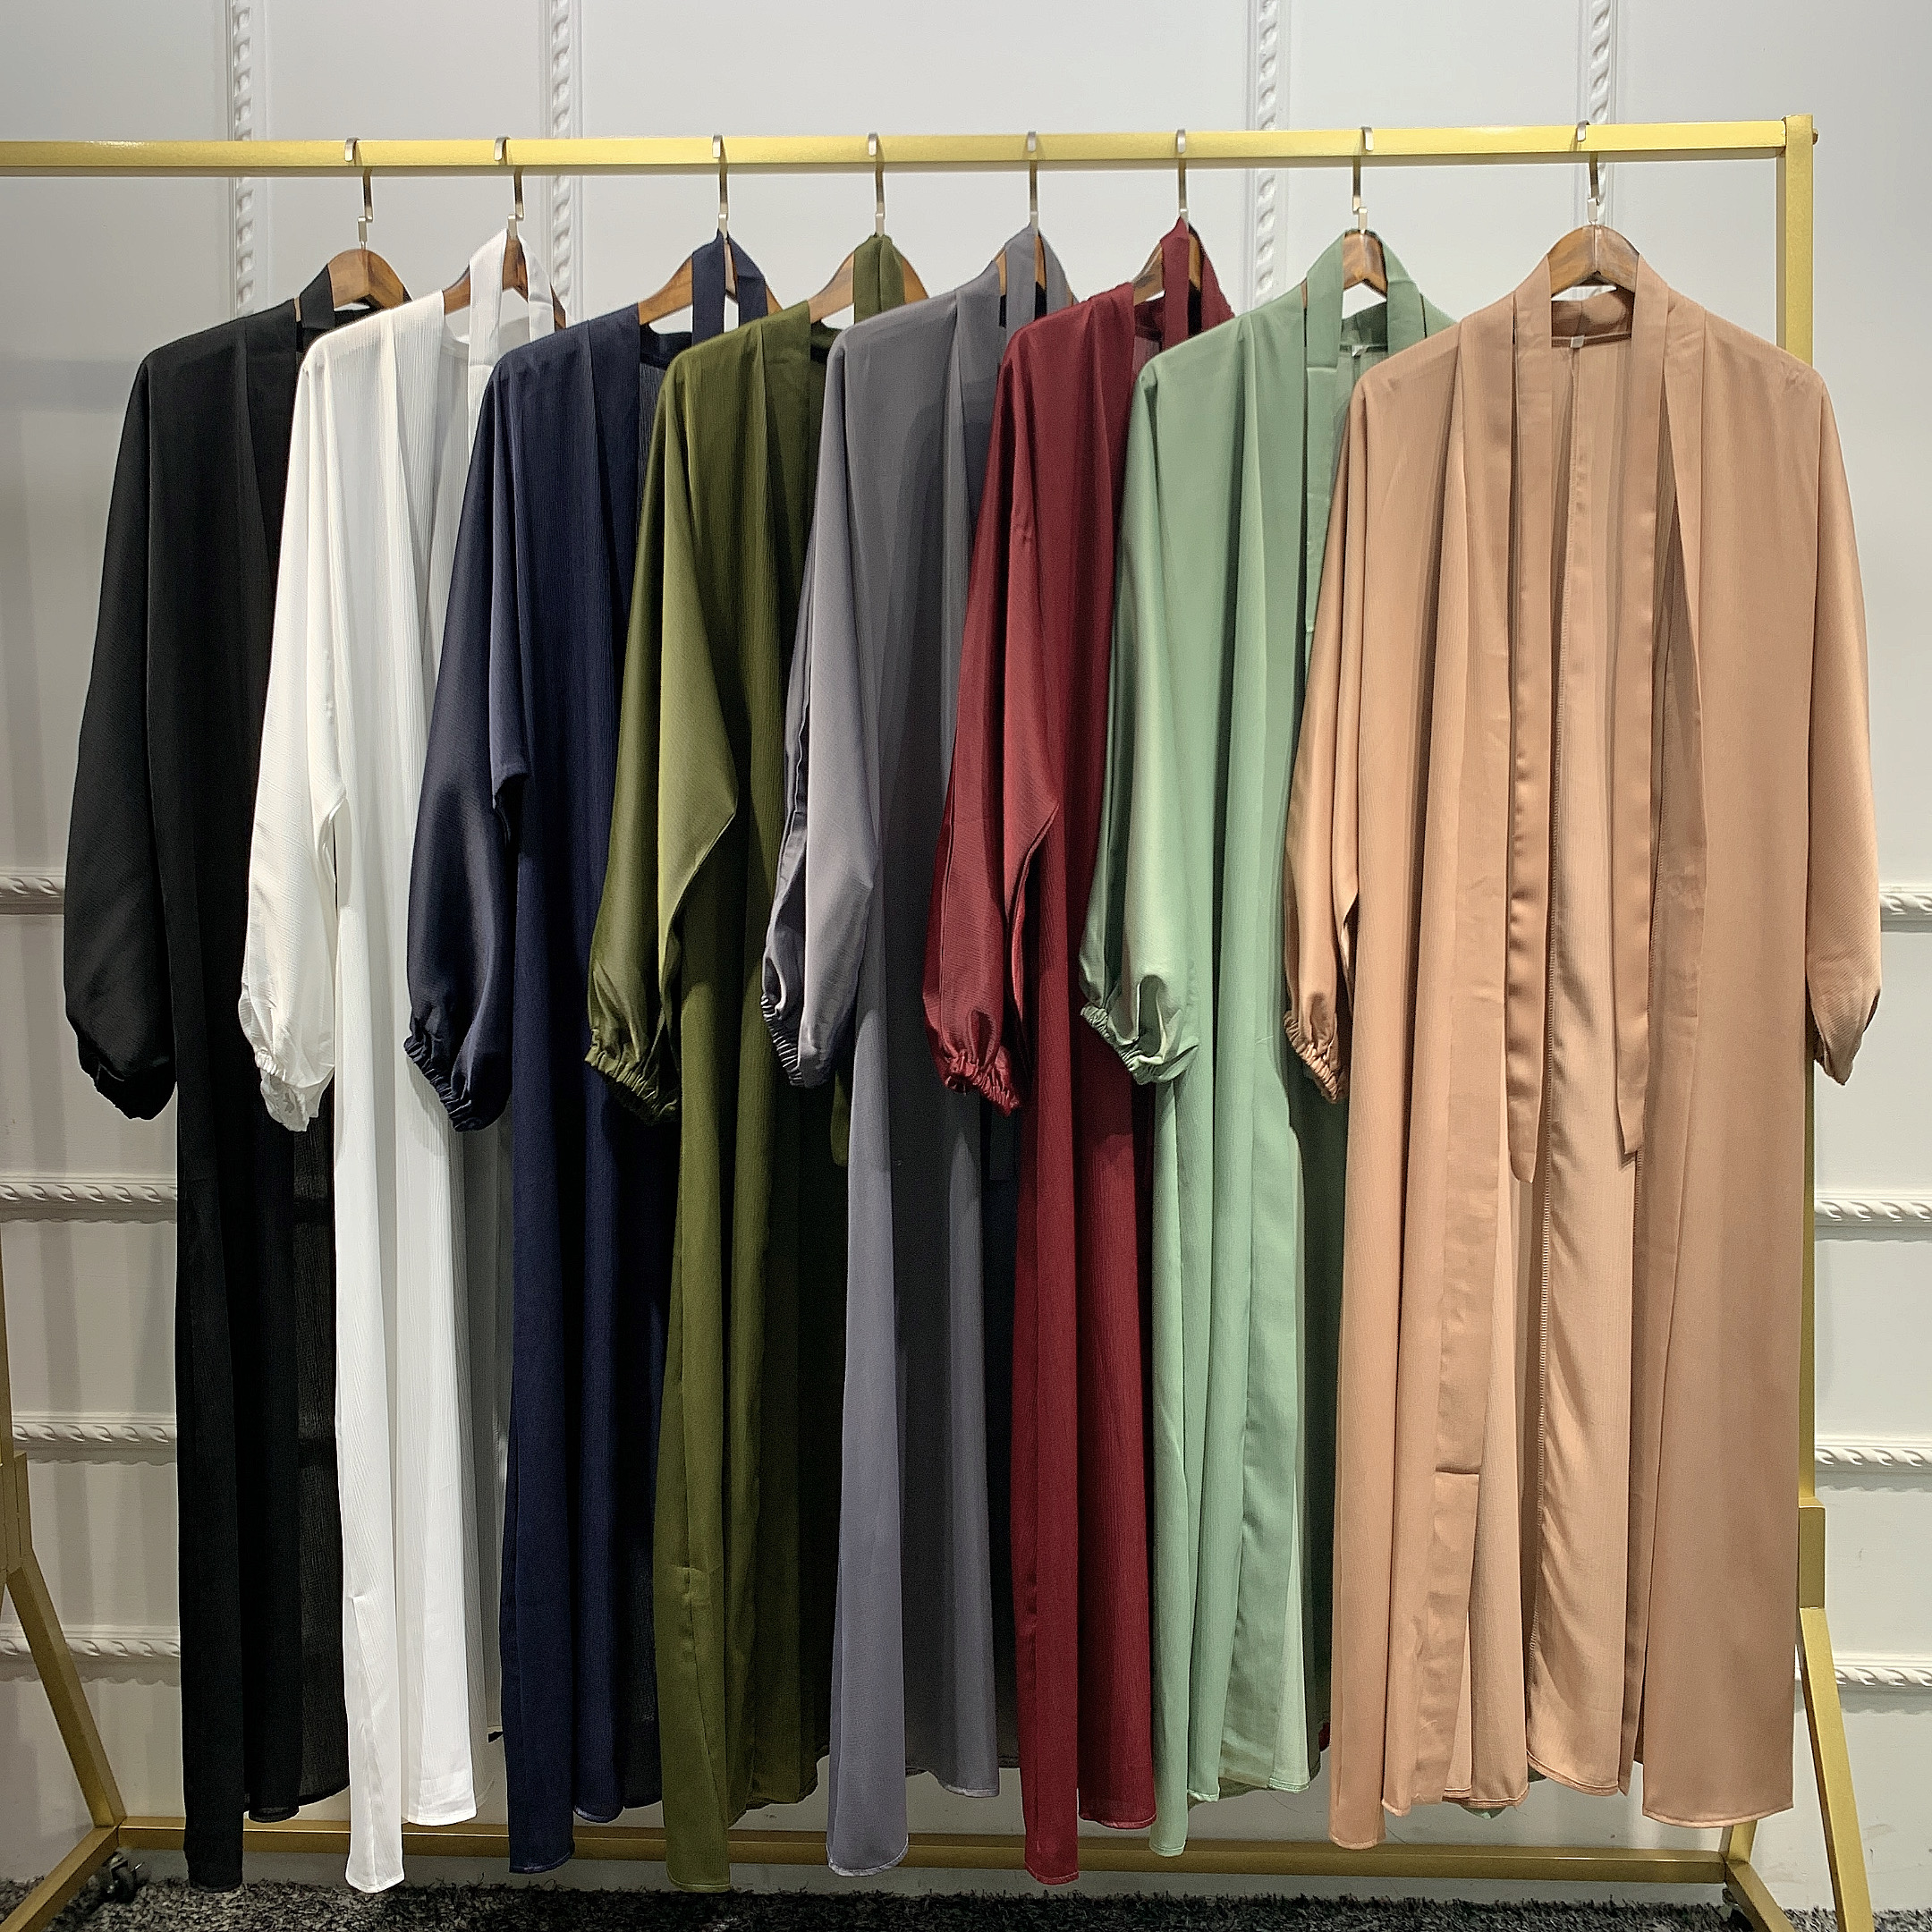 2022 Dubai Turkish Modern Casual set outfit Satin Loose top and pants set Islamic set wholesale